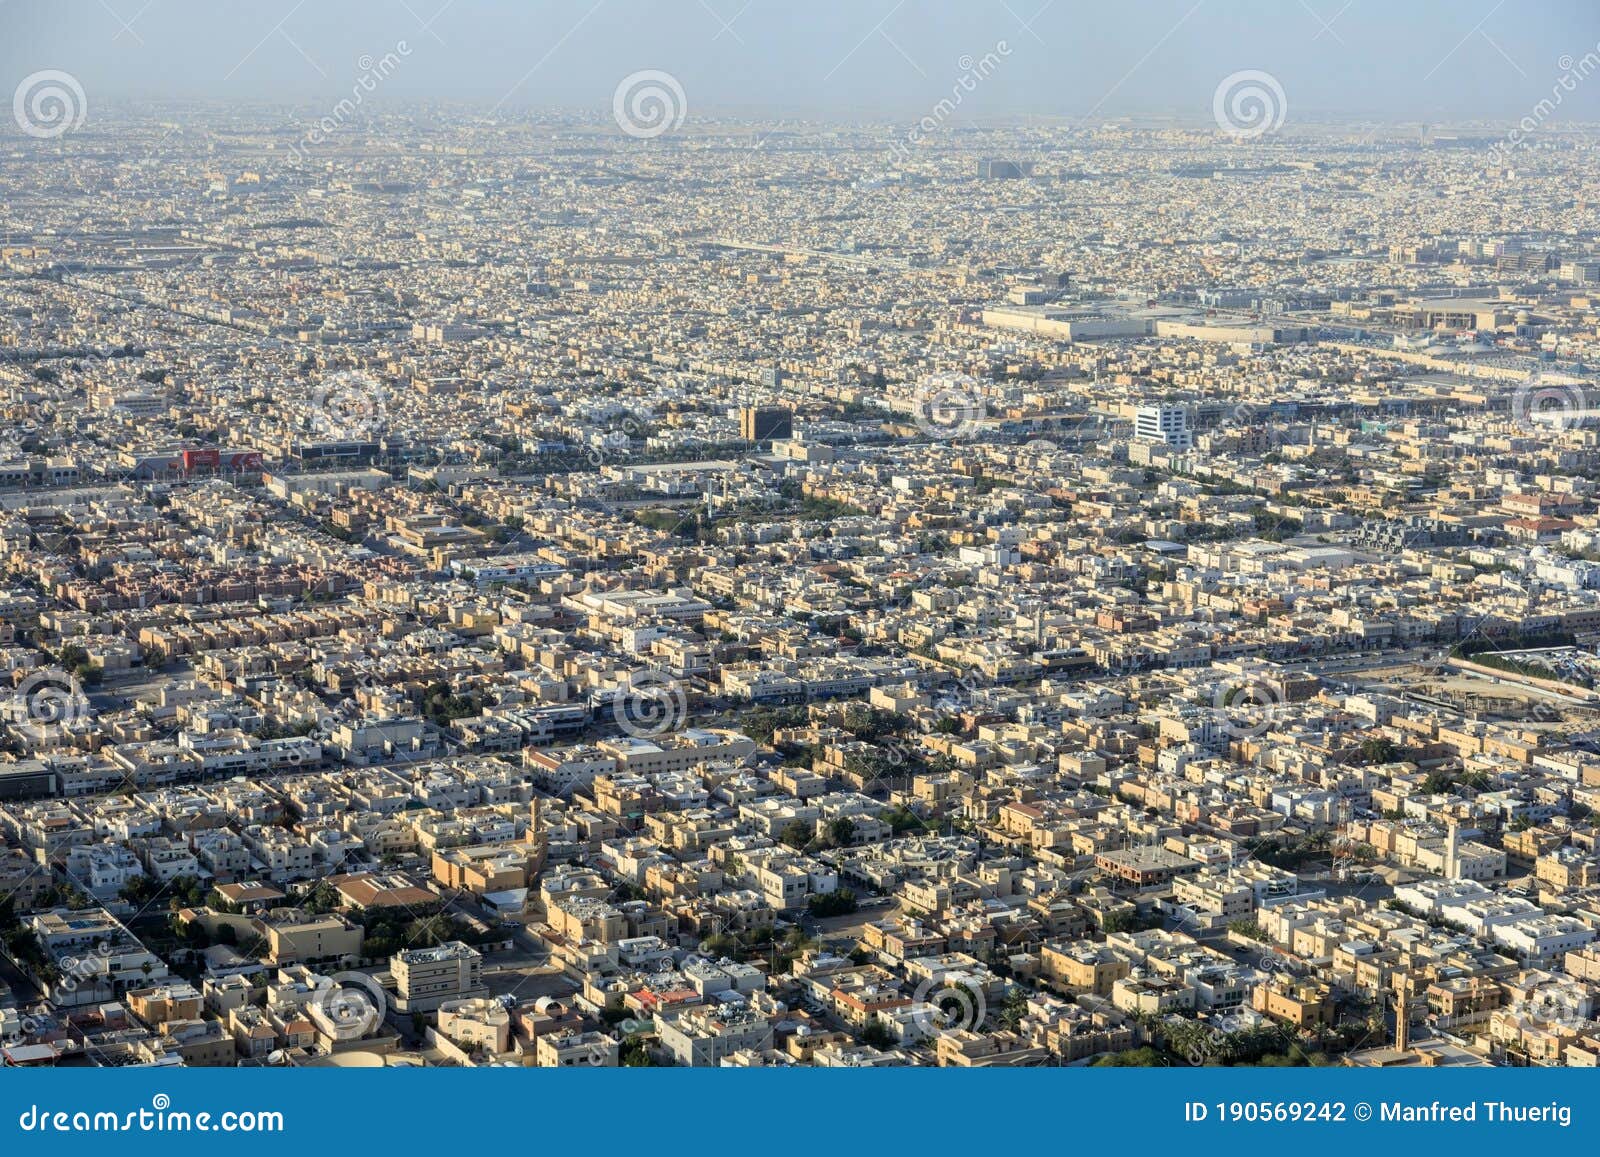 Riad, Saudi Arabia, February 14 2020: Aerial View Of ...